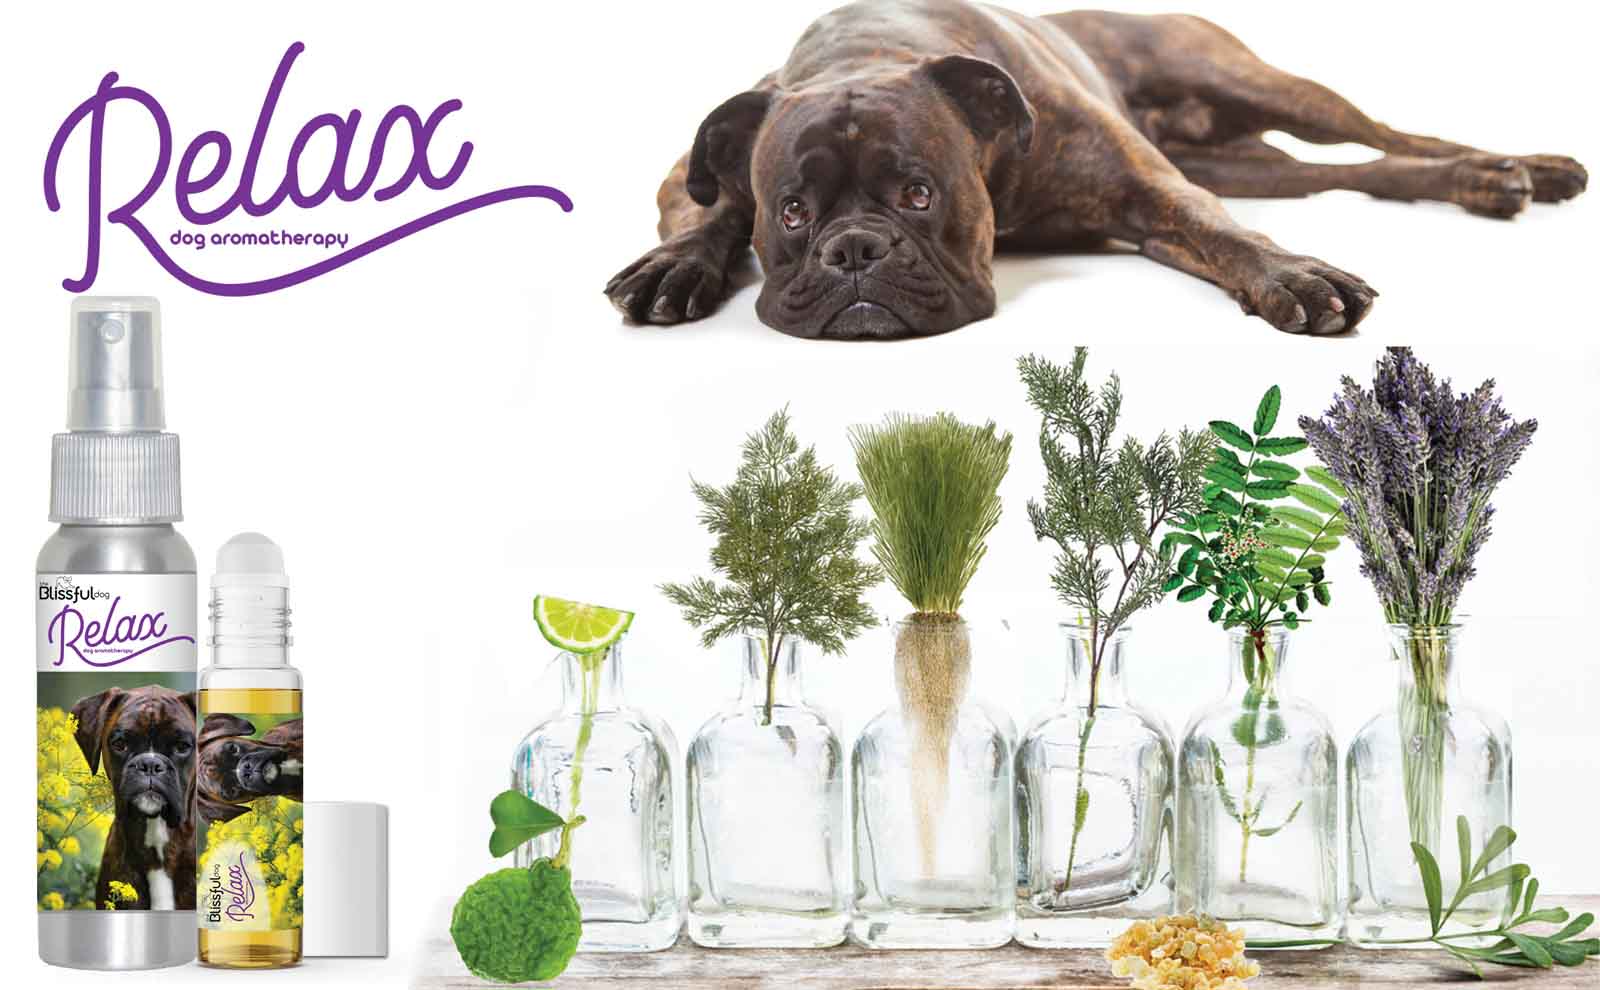 boxer dog aromatherapy